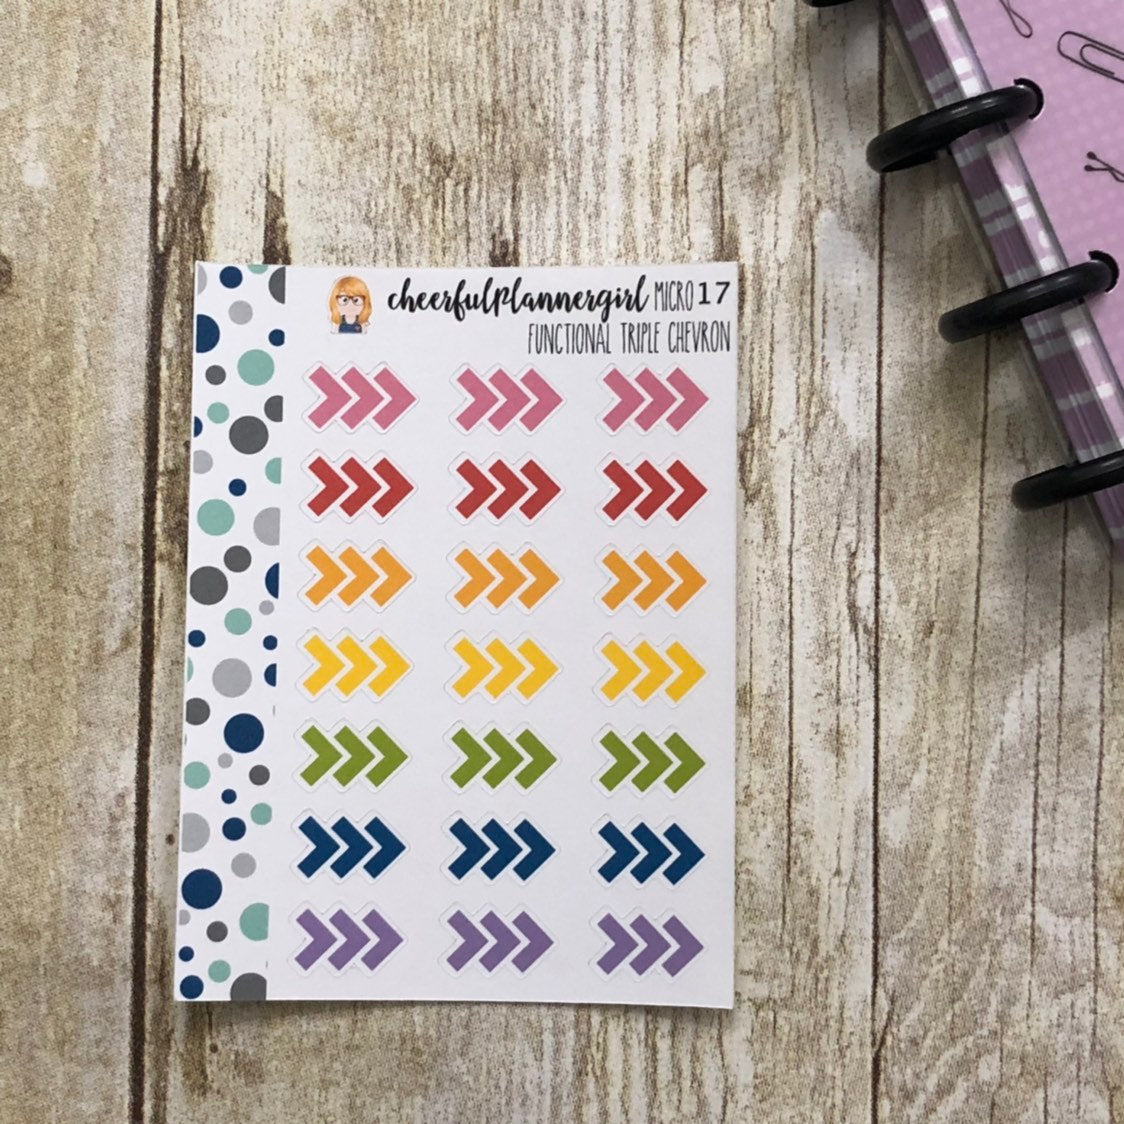 Rainbow Functional Triple Chevron Planner Stickers